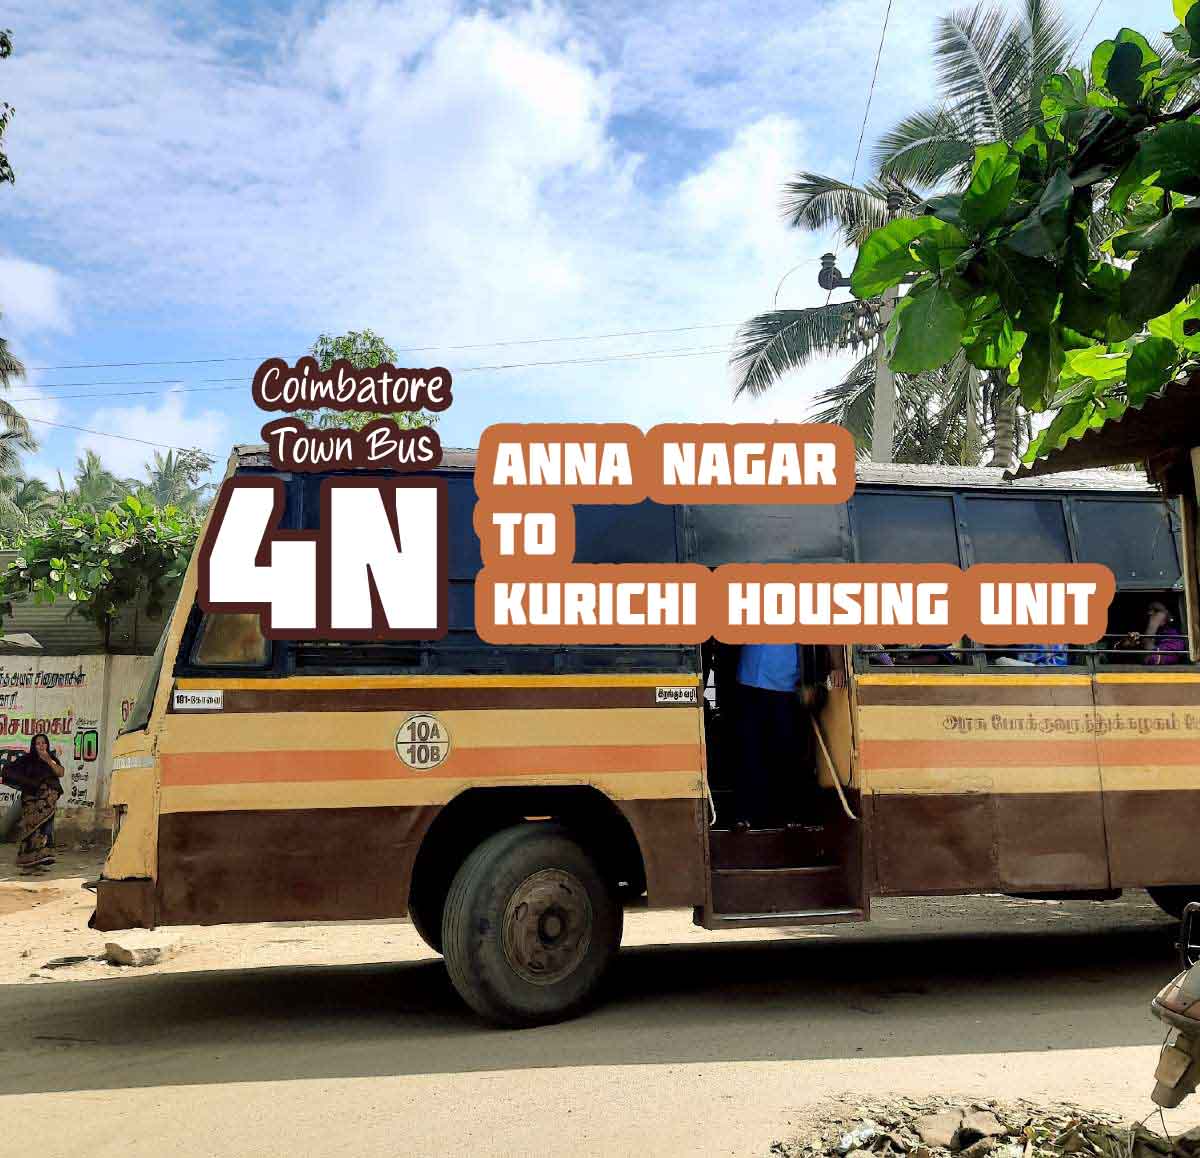 Coimbatore Town Bus Route 4N Anna Nagar to Kurichi Housing Unit Bus Timings